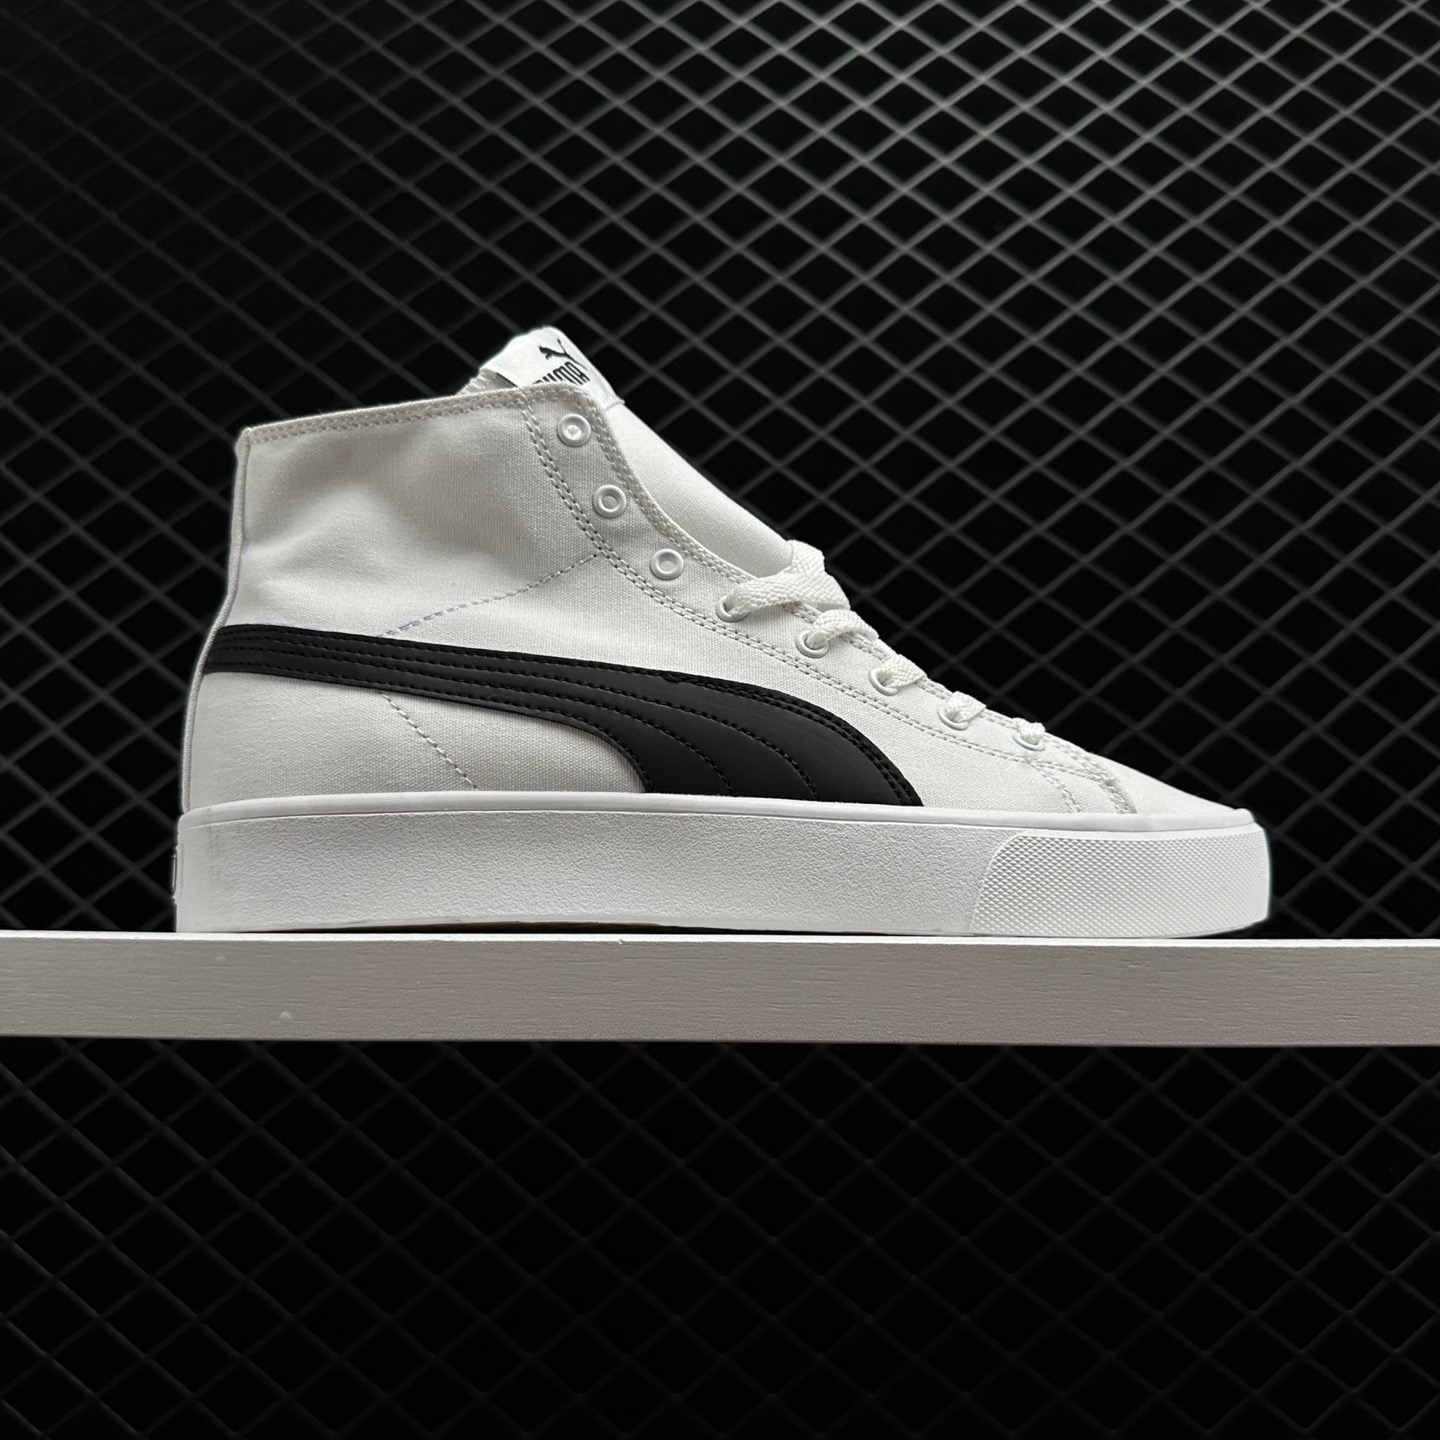 Puma Bari Mid 'White Black' Sneakers - Premium Quality Athletic Shoes | 373891 01